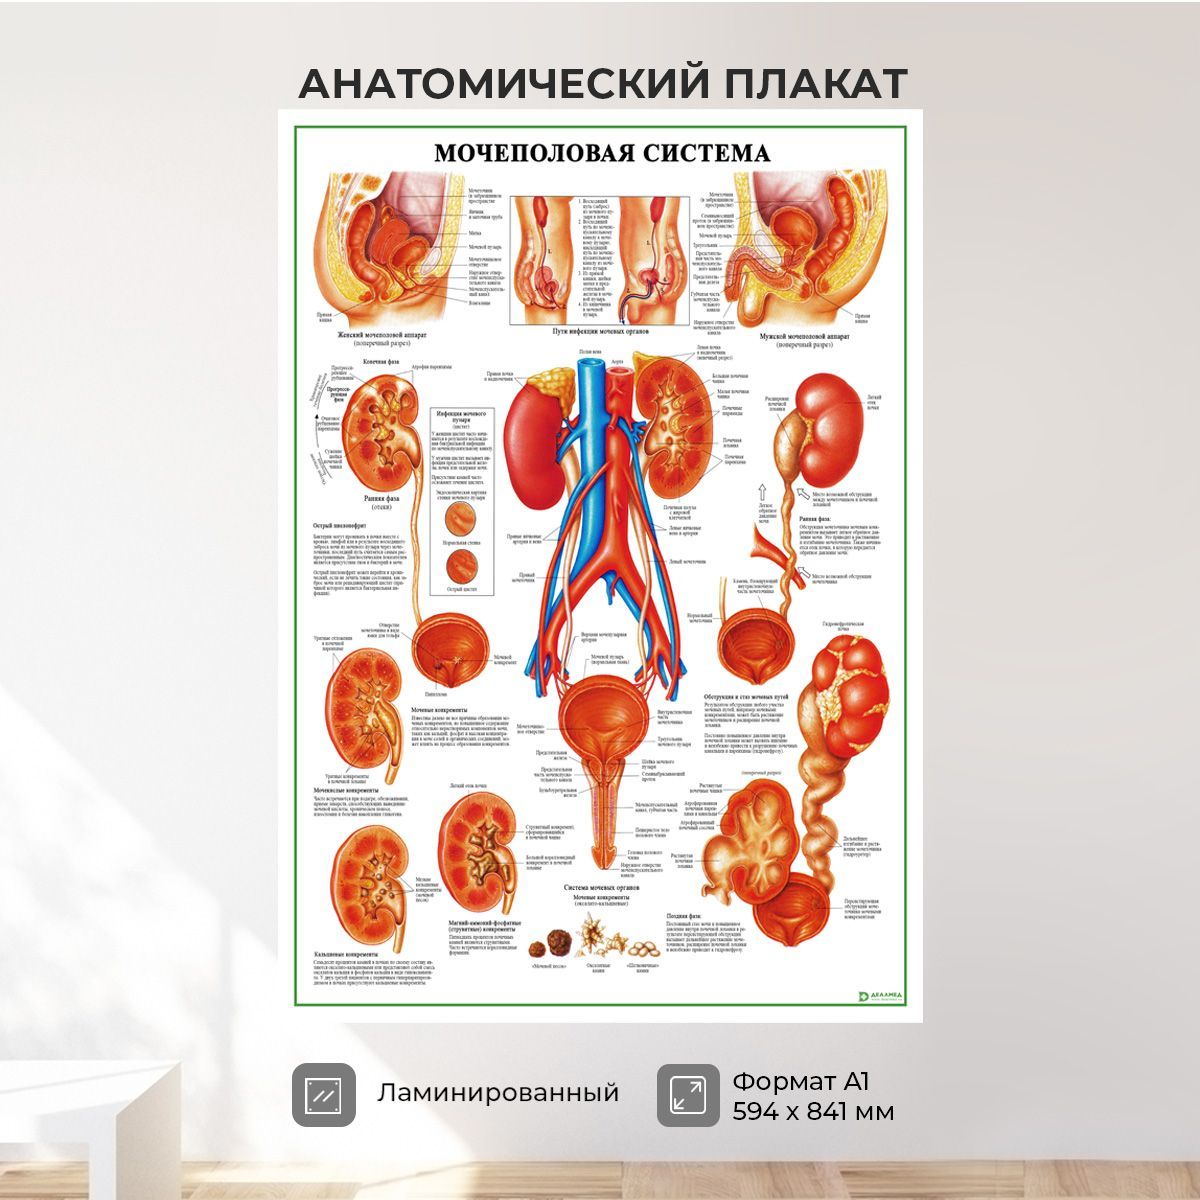 Анатомический плакат. Мочеполовая система плакат. Анатомические плакаты. Медицинские плакаты. Анатомический плакат человека.